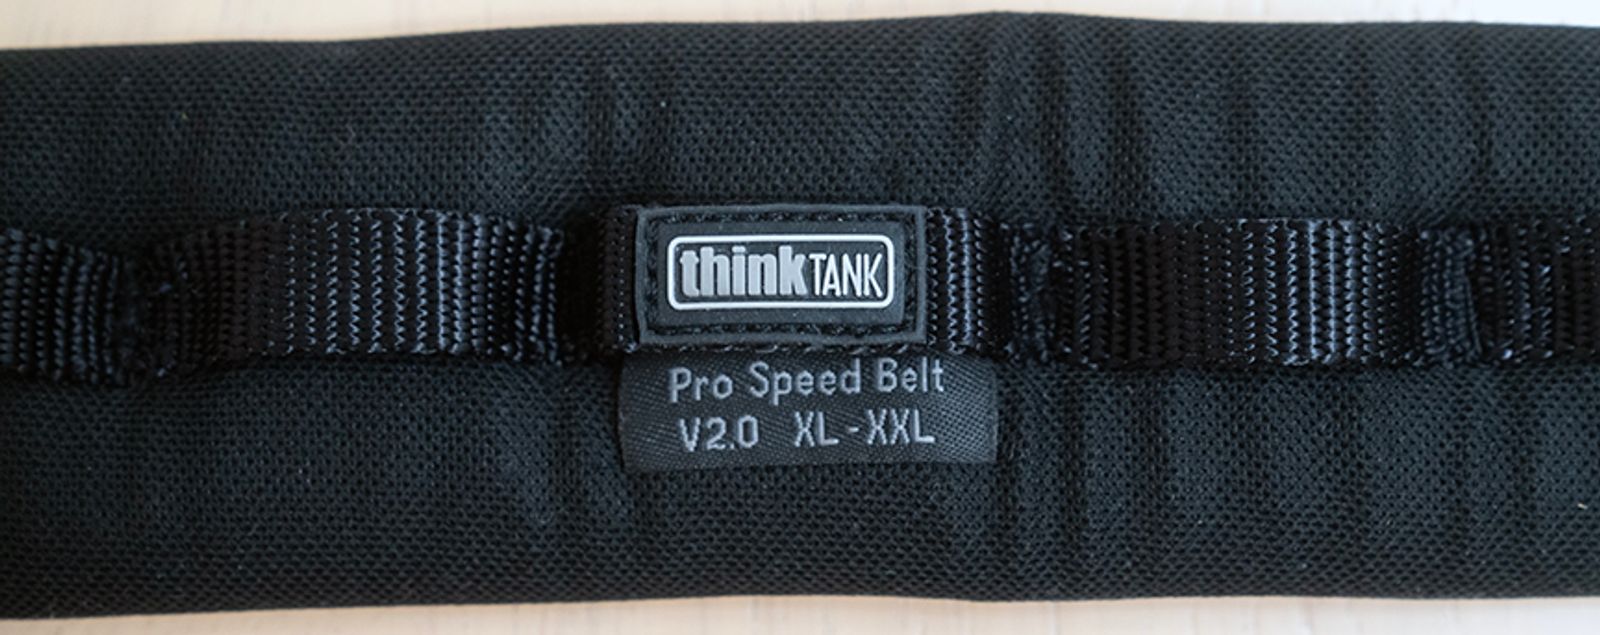 thumbnail-2 for Think Tank Pro Speed Belt V 2.0 XL-XXL.